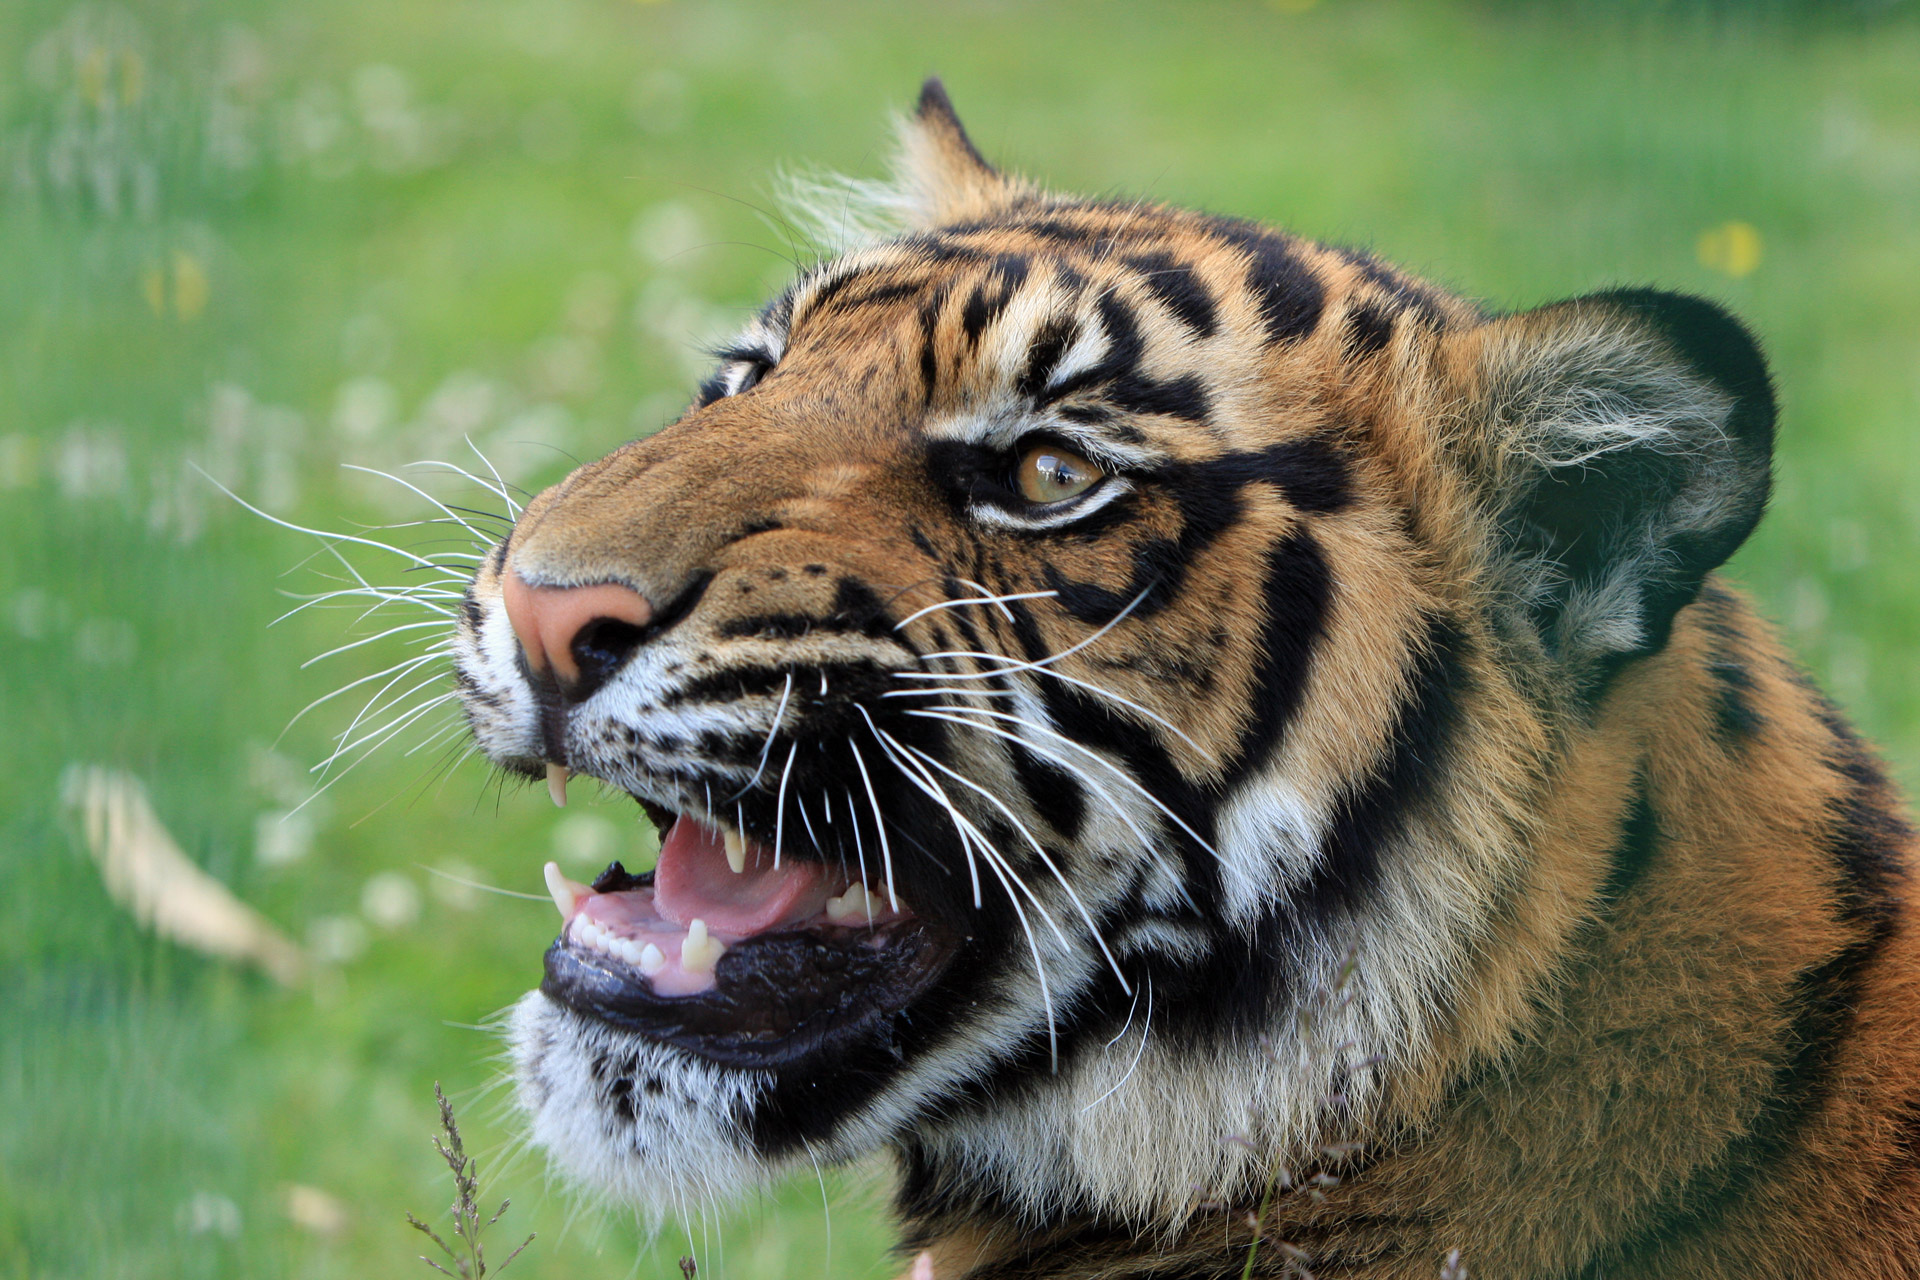 tiger snarling close-up free photo